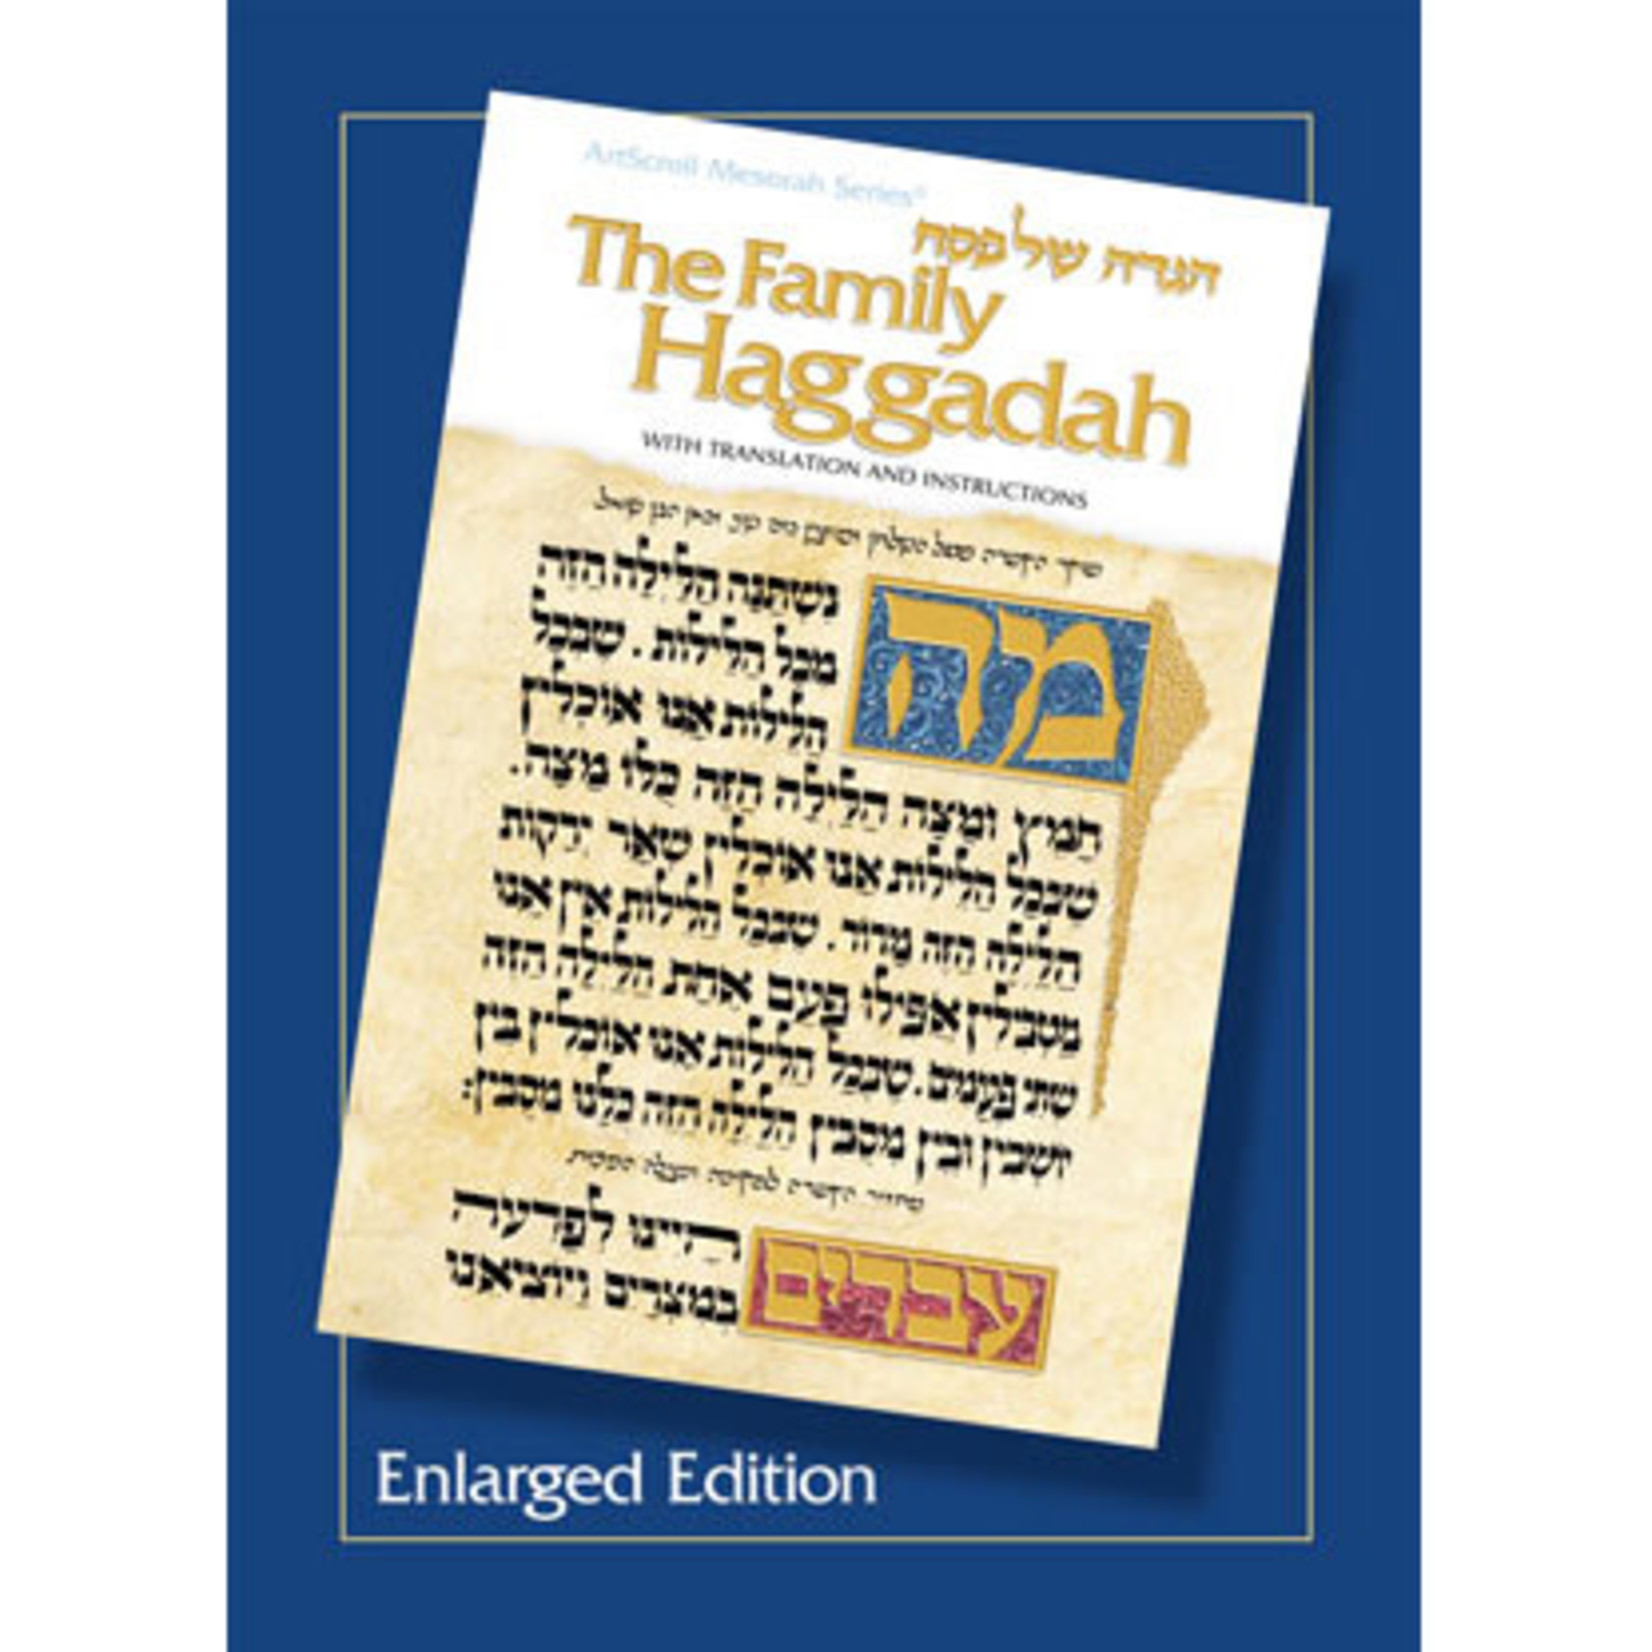 Family Haggadah, Enlarged Edition